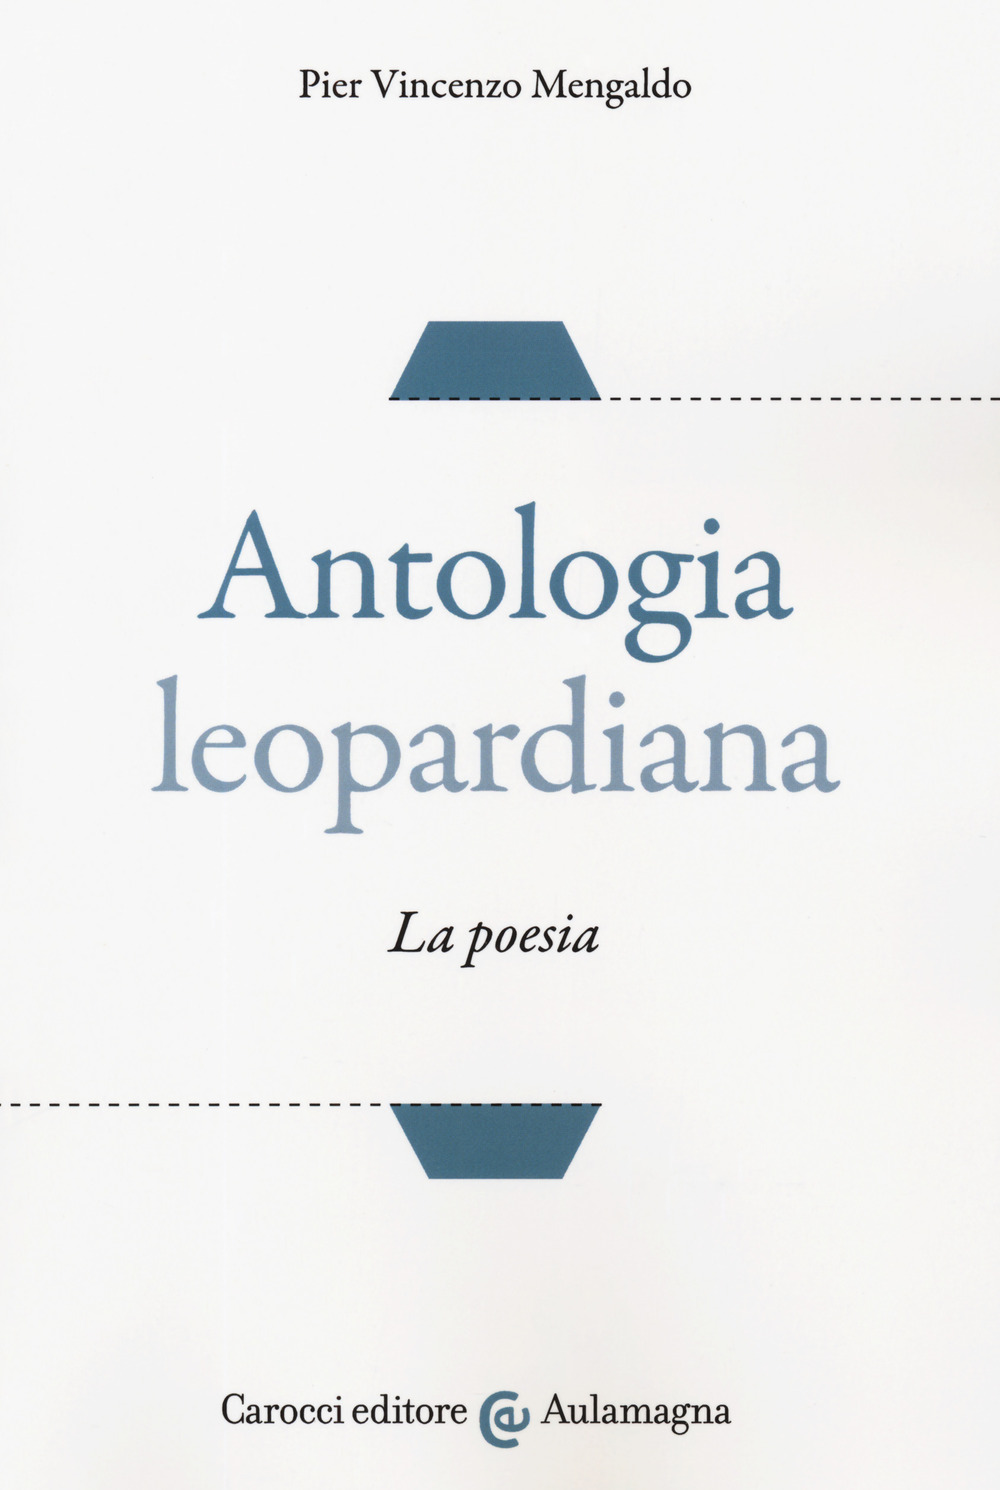 Image of Antologia leopardiana. La poesia